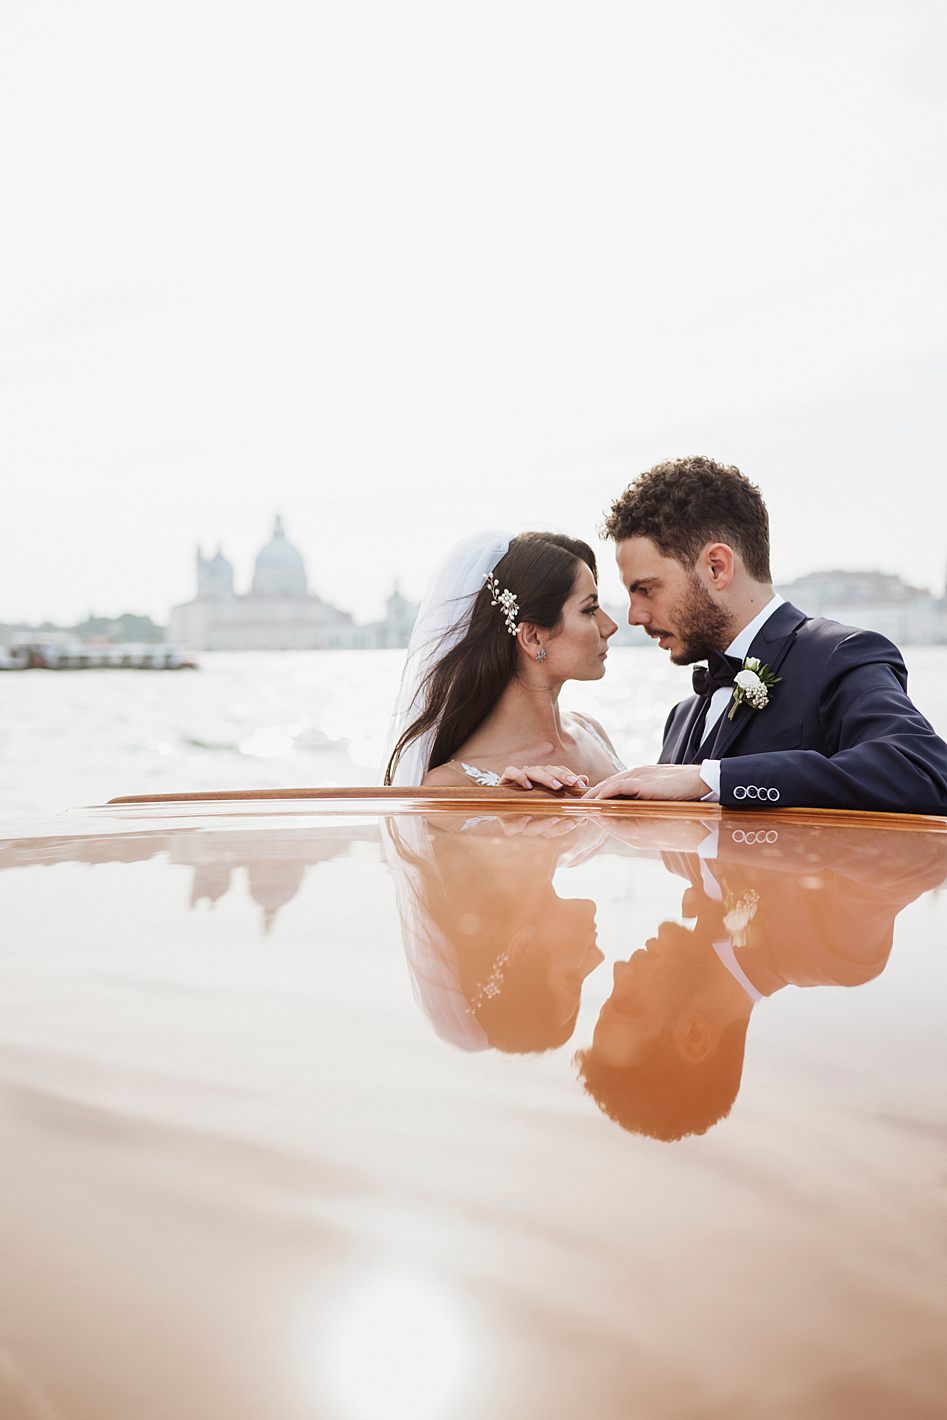 matrimonio elegante a venezia